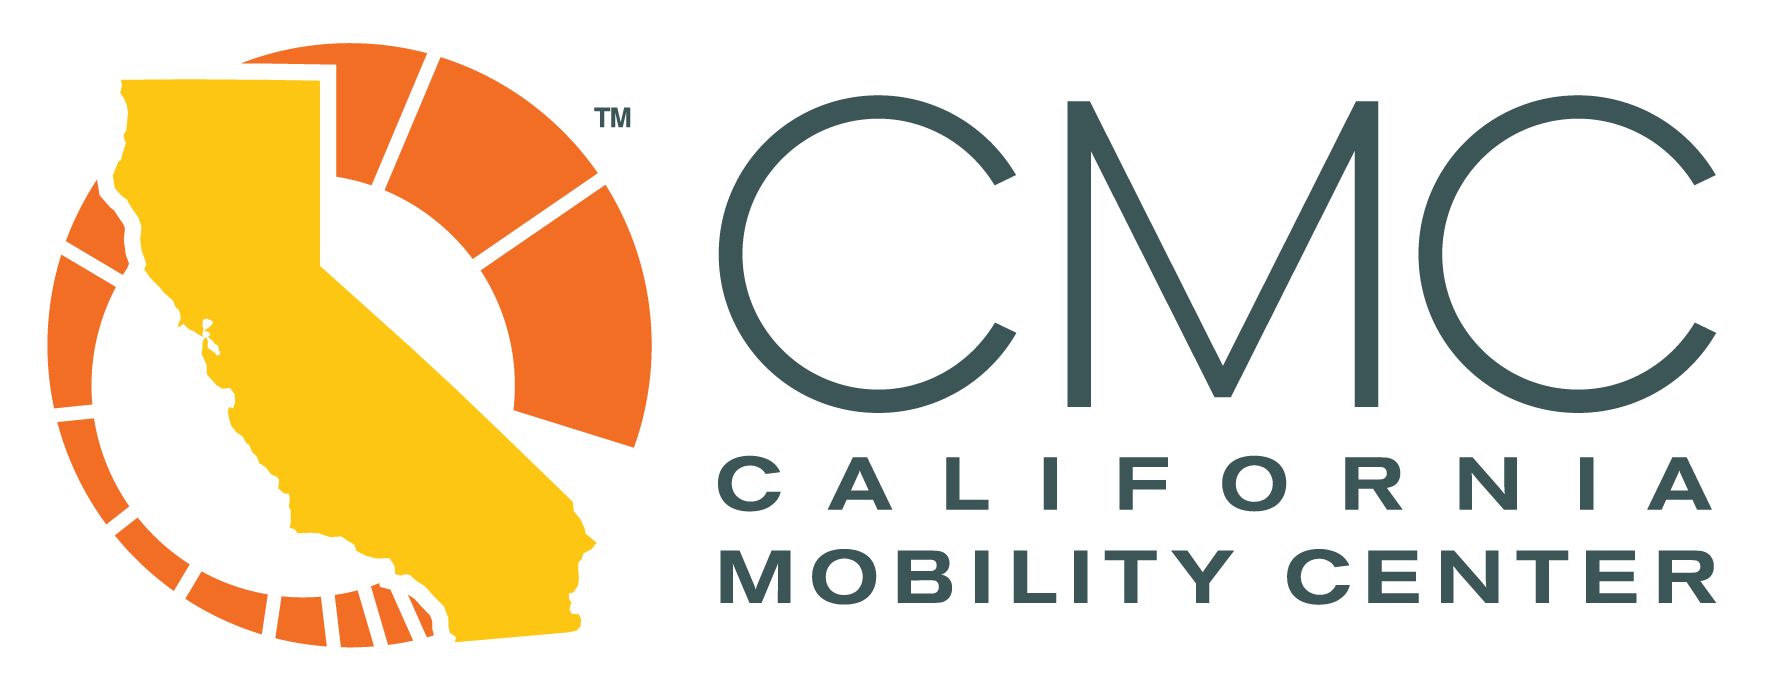 CMC-logo-horizontal